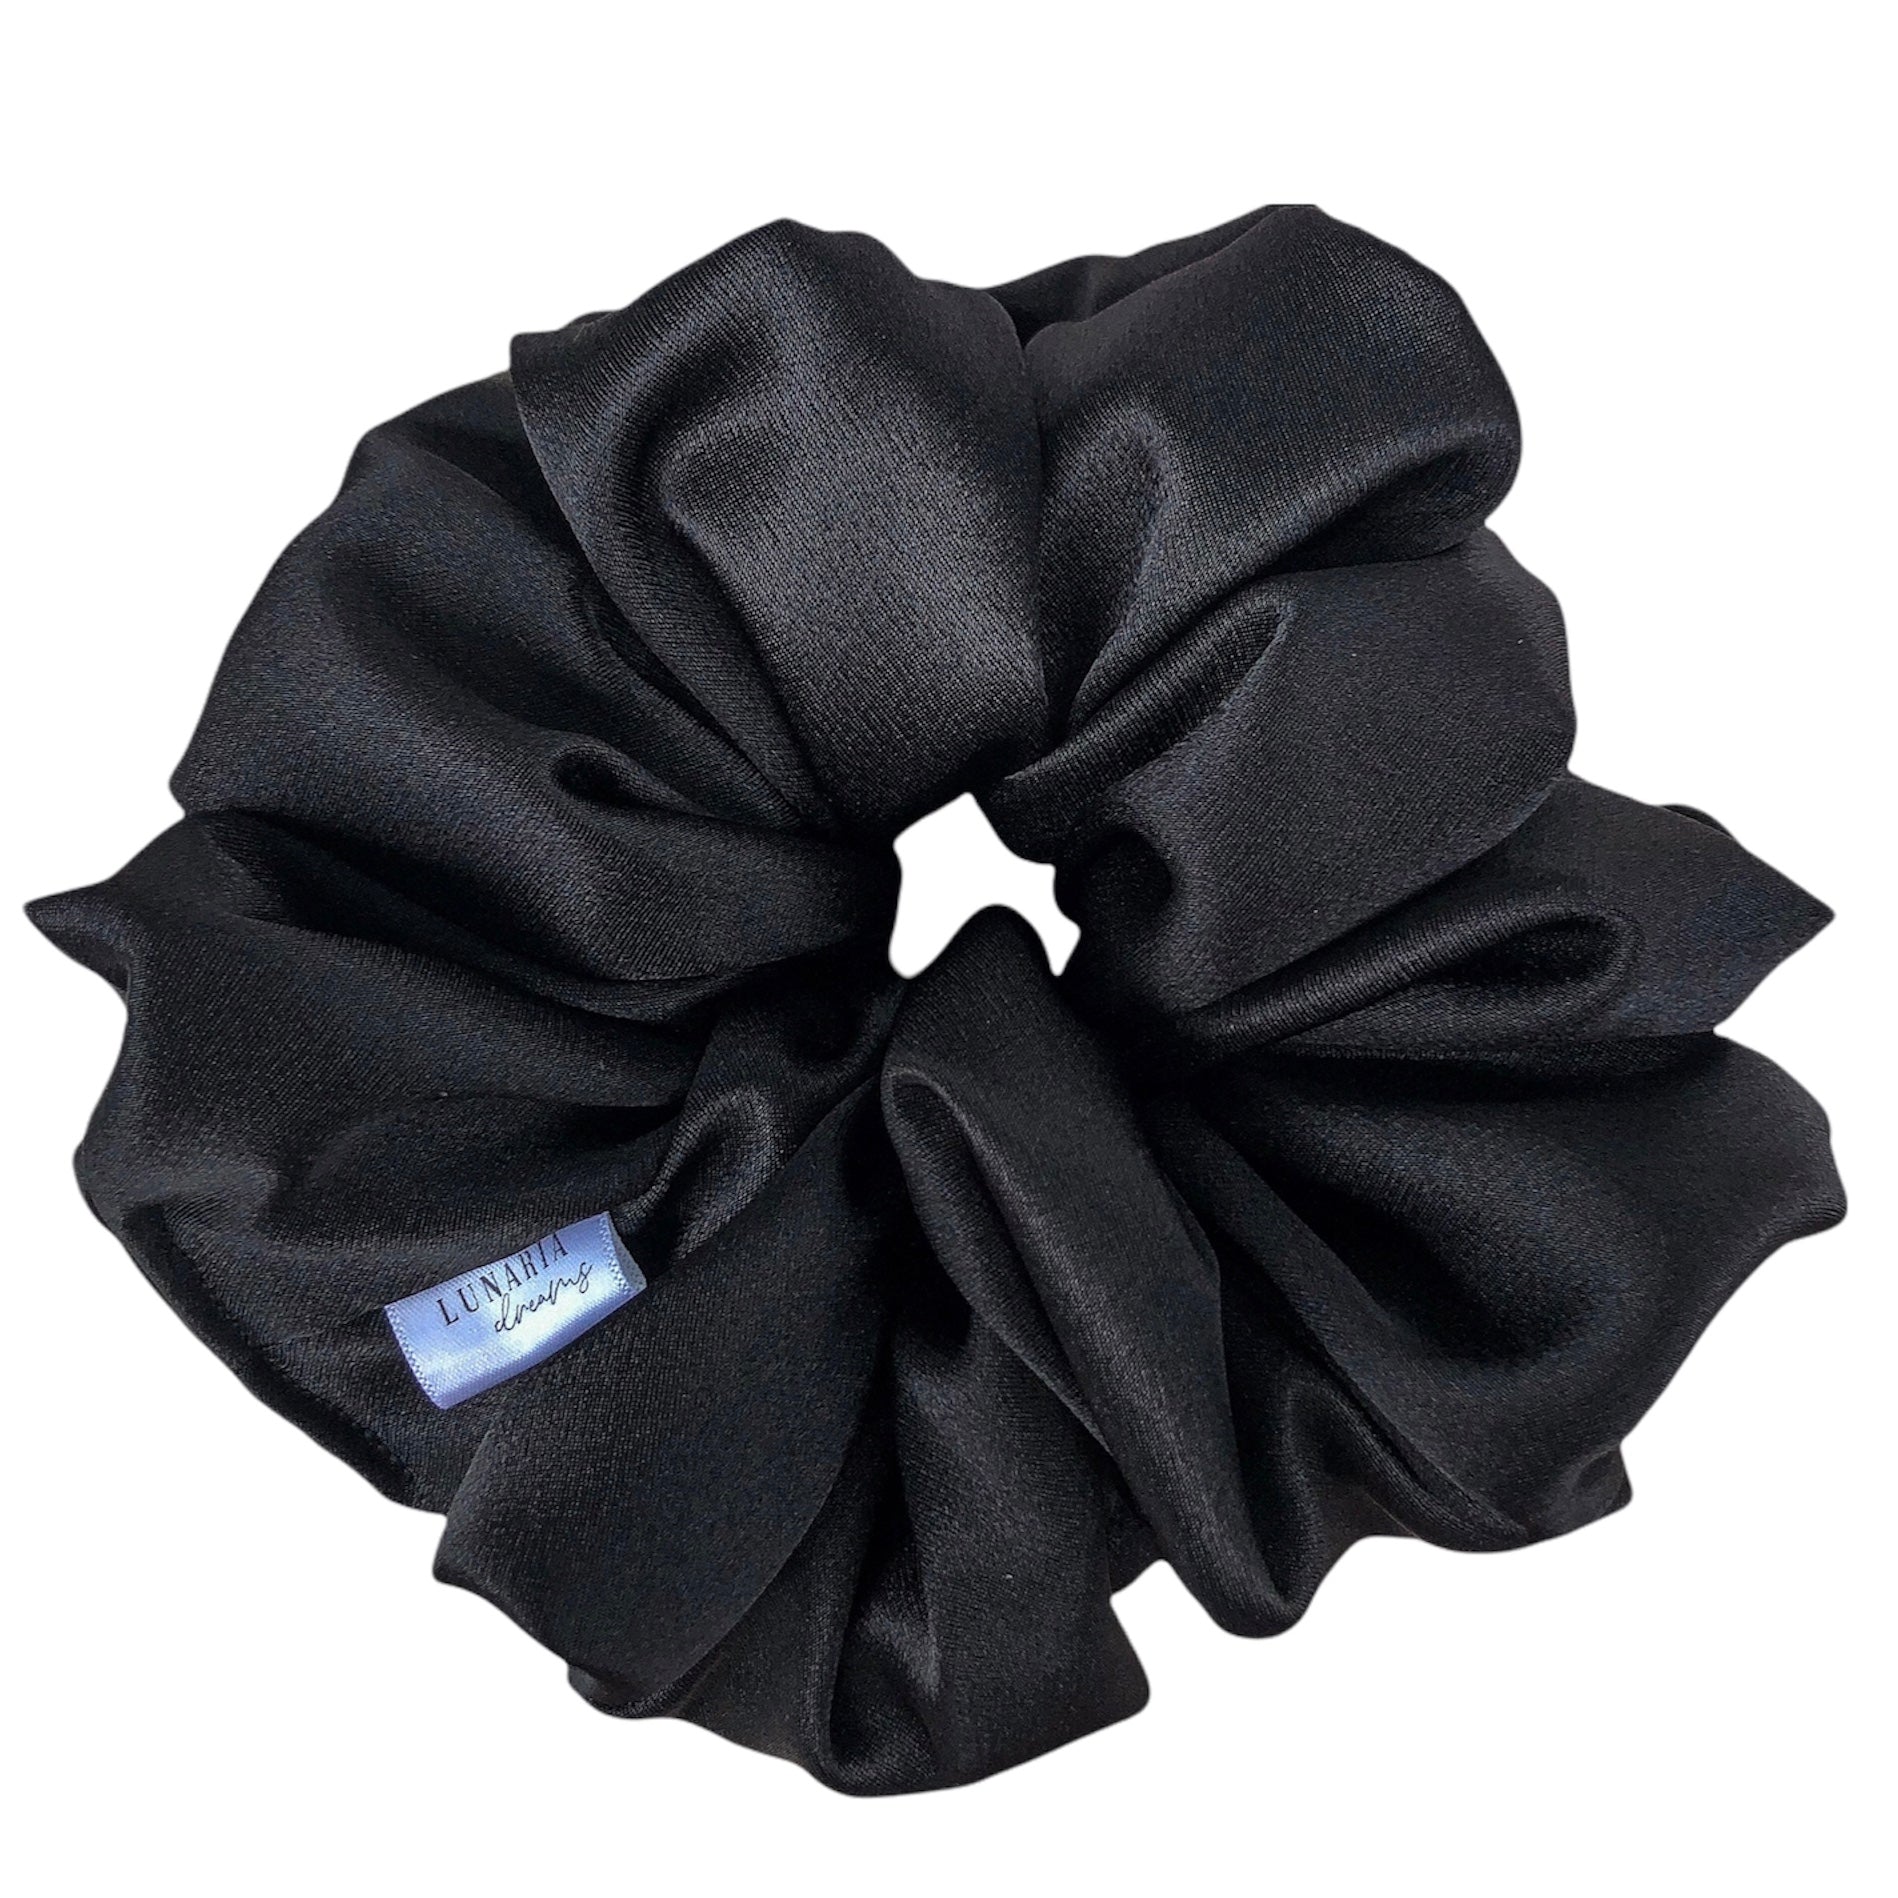 Oversized Raven Scrunchie. An XL, extra luxe black satin scrunchie.